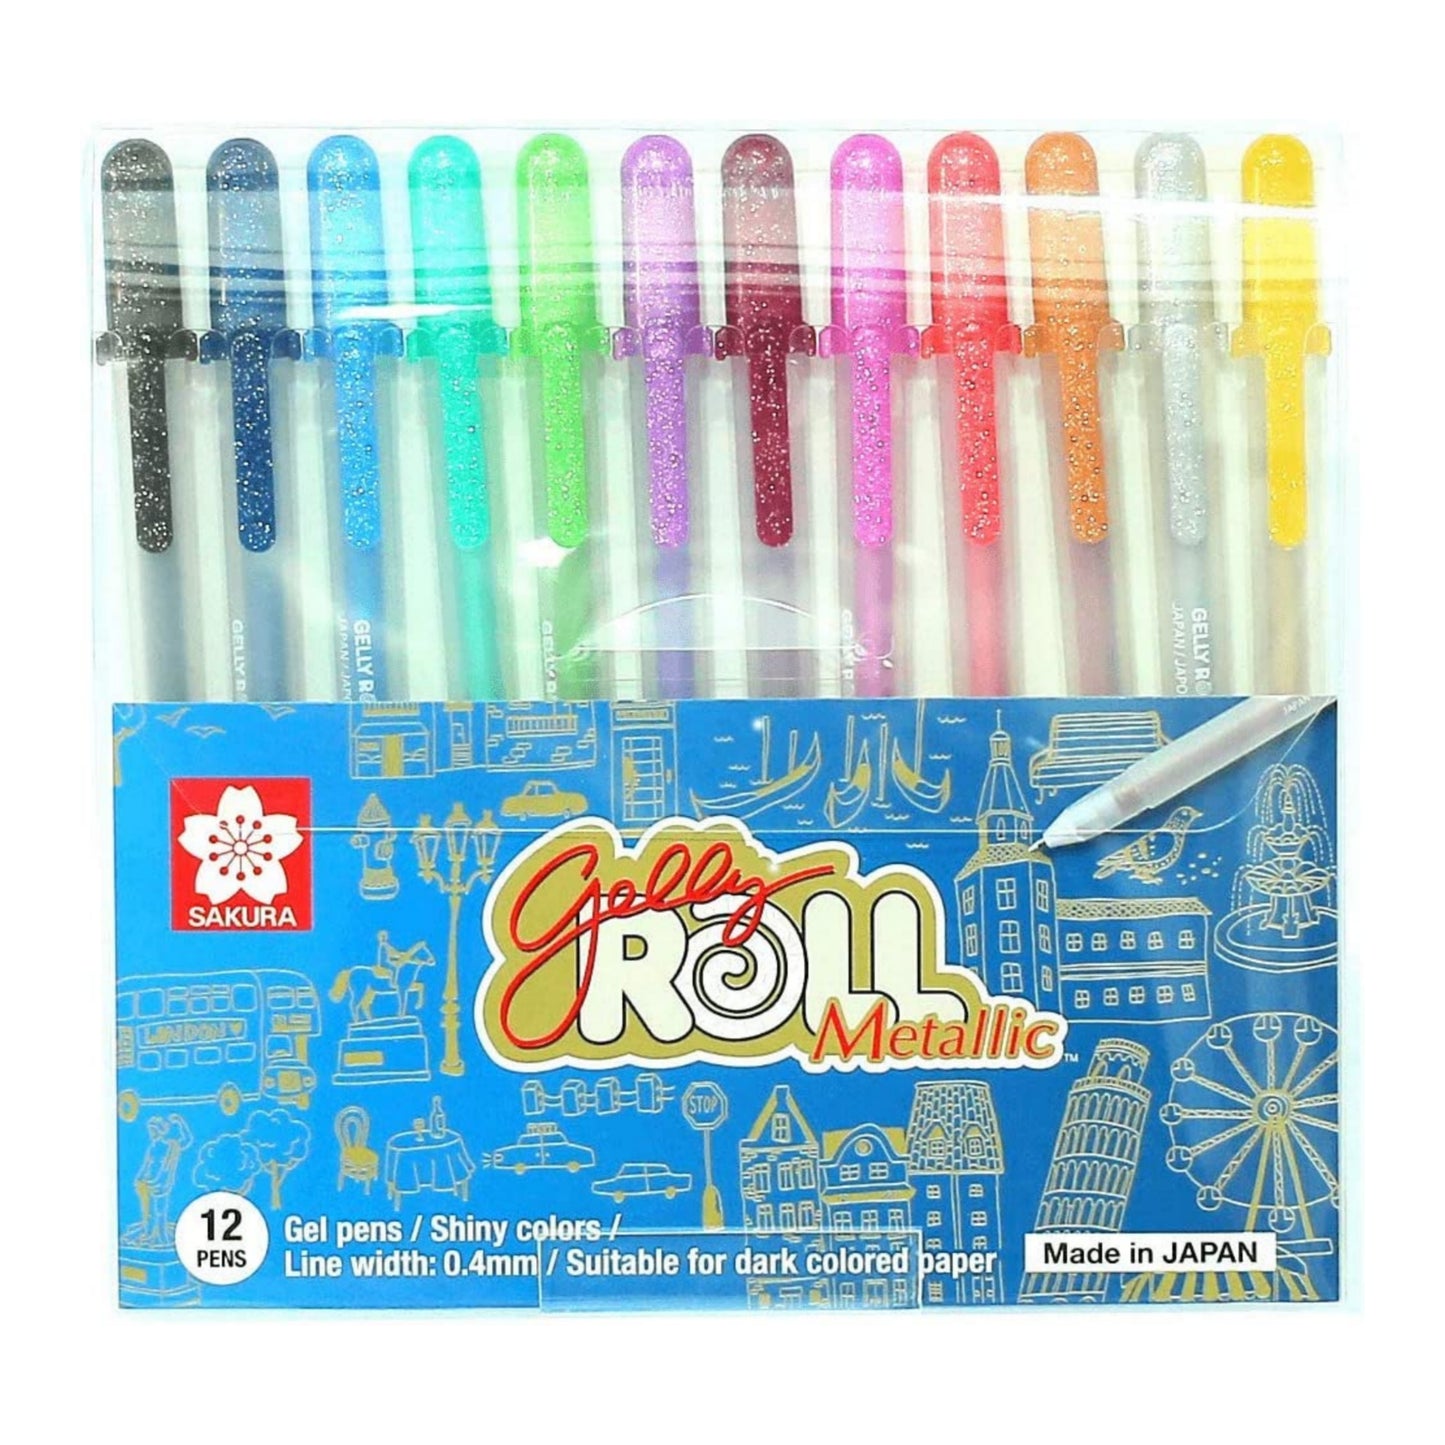 Sakura Gelly Roll Metallic Gel pens - set of 12 assorted colors - Metallic shades